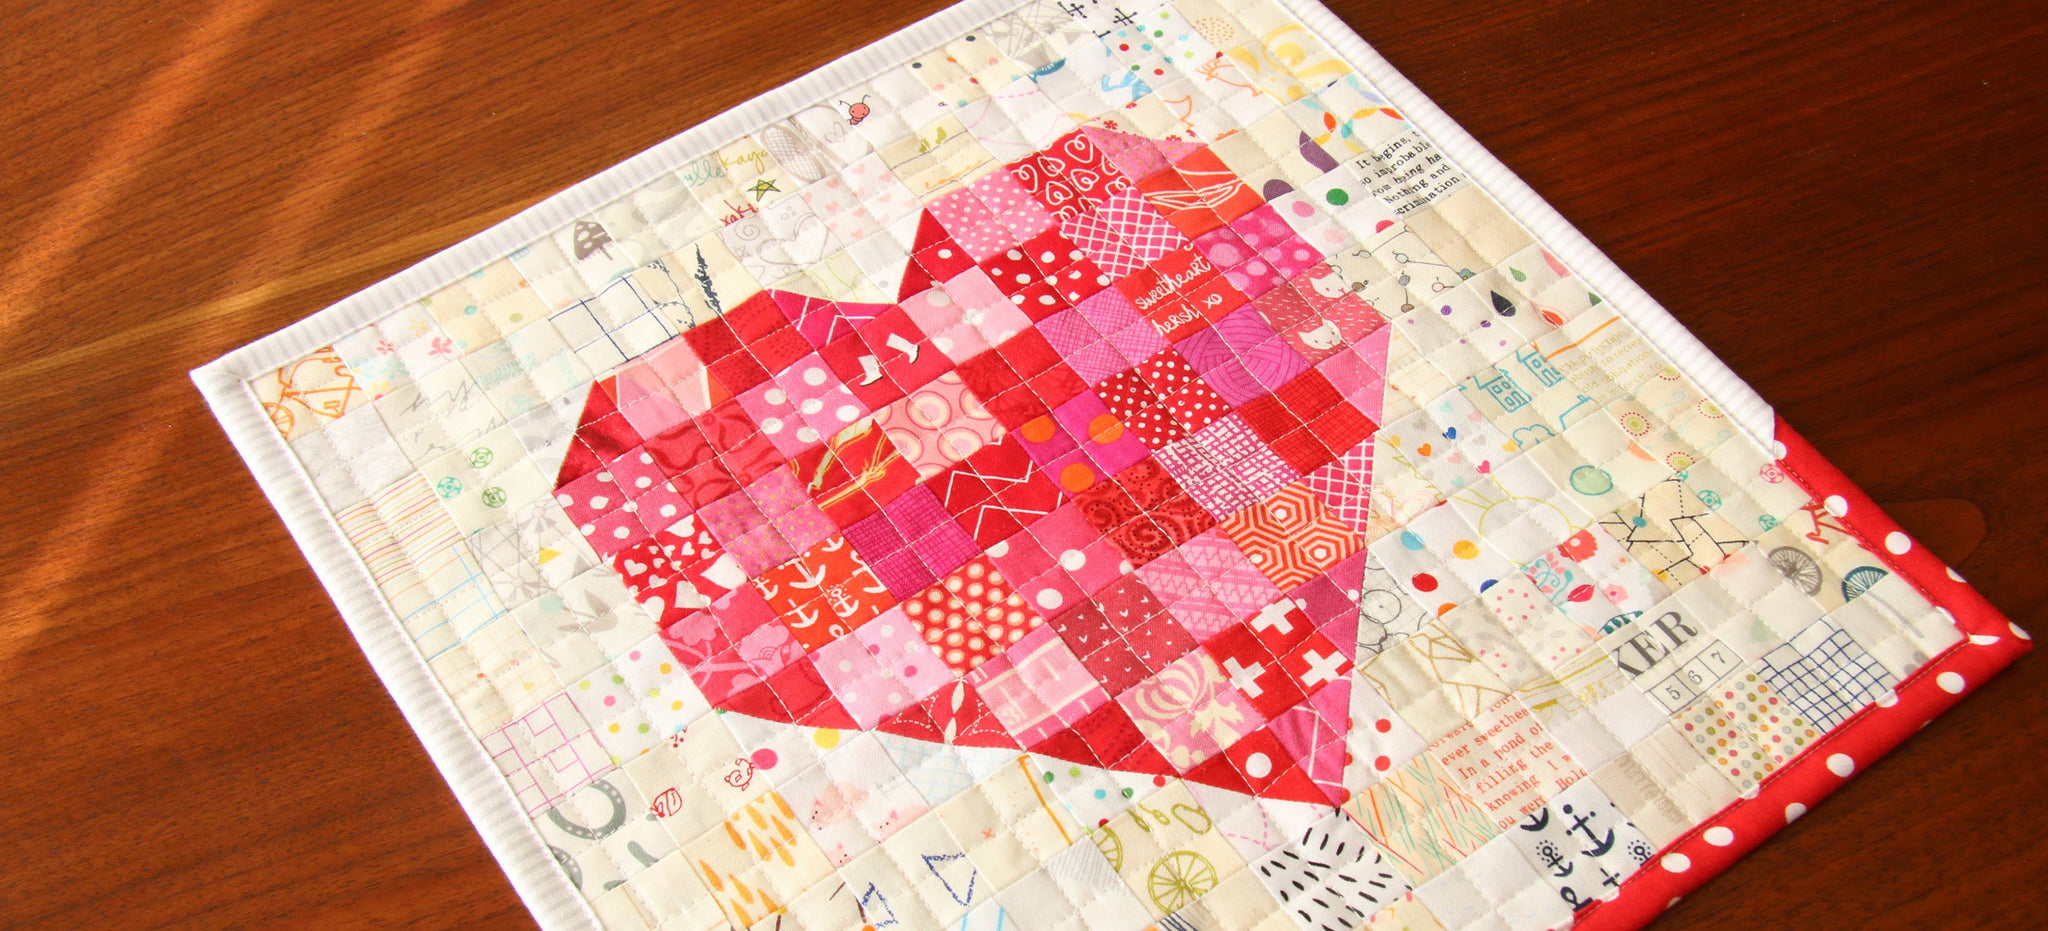 Heart Quilt Block Paper Piecing Pattern I Heart Quilting 